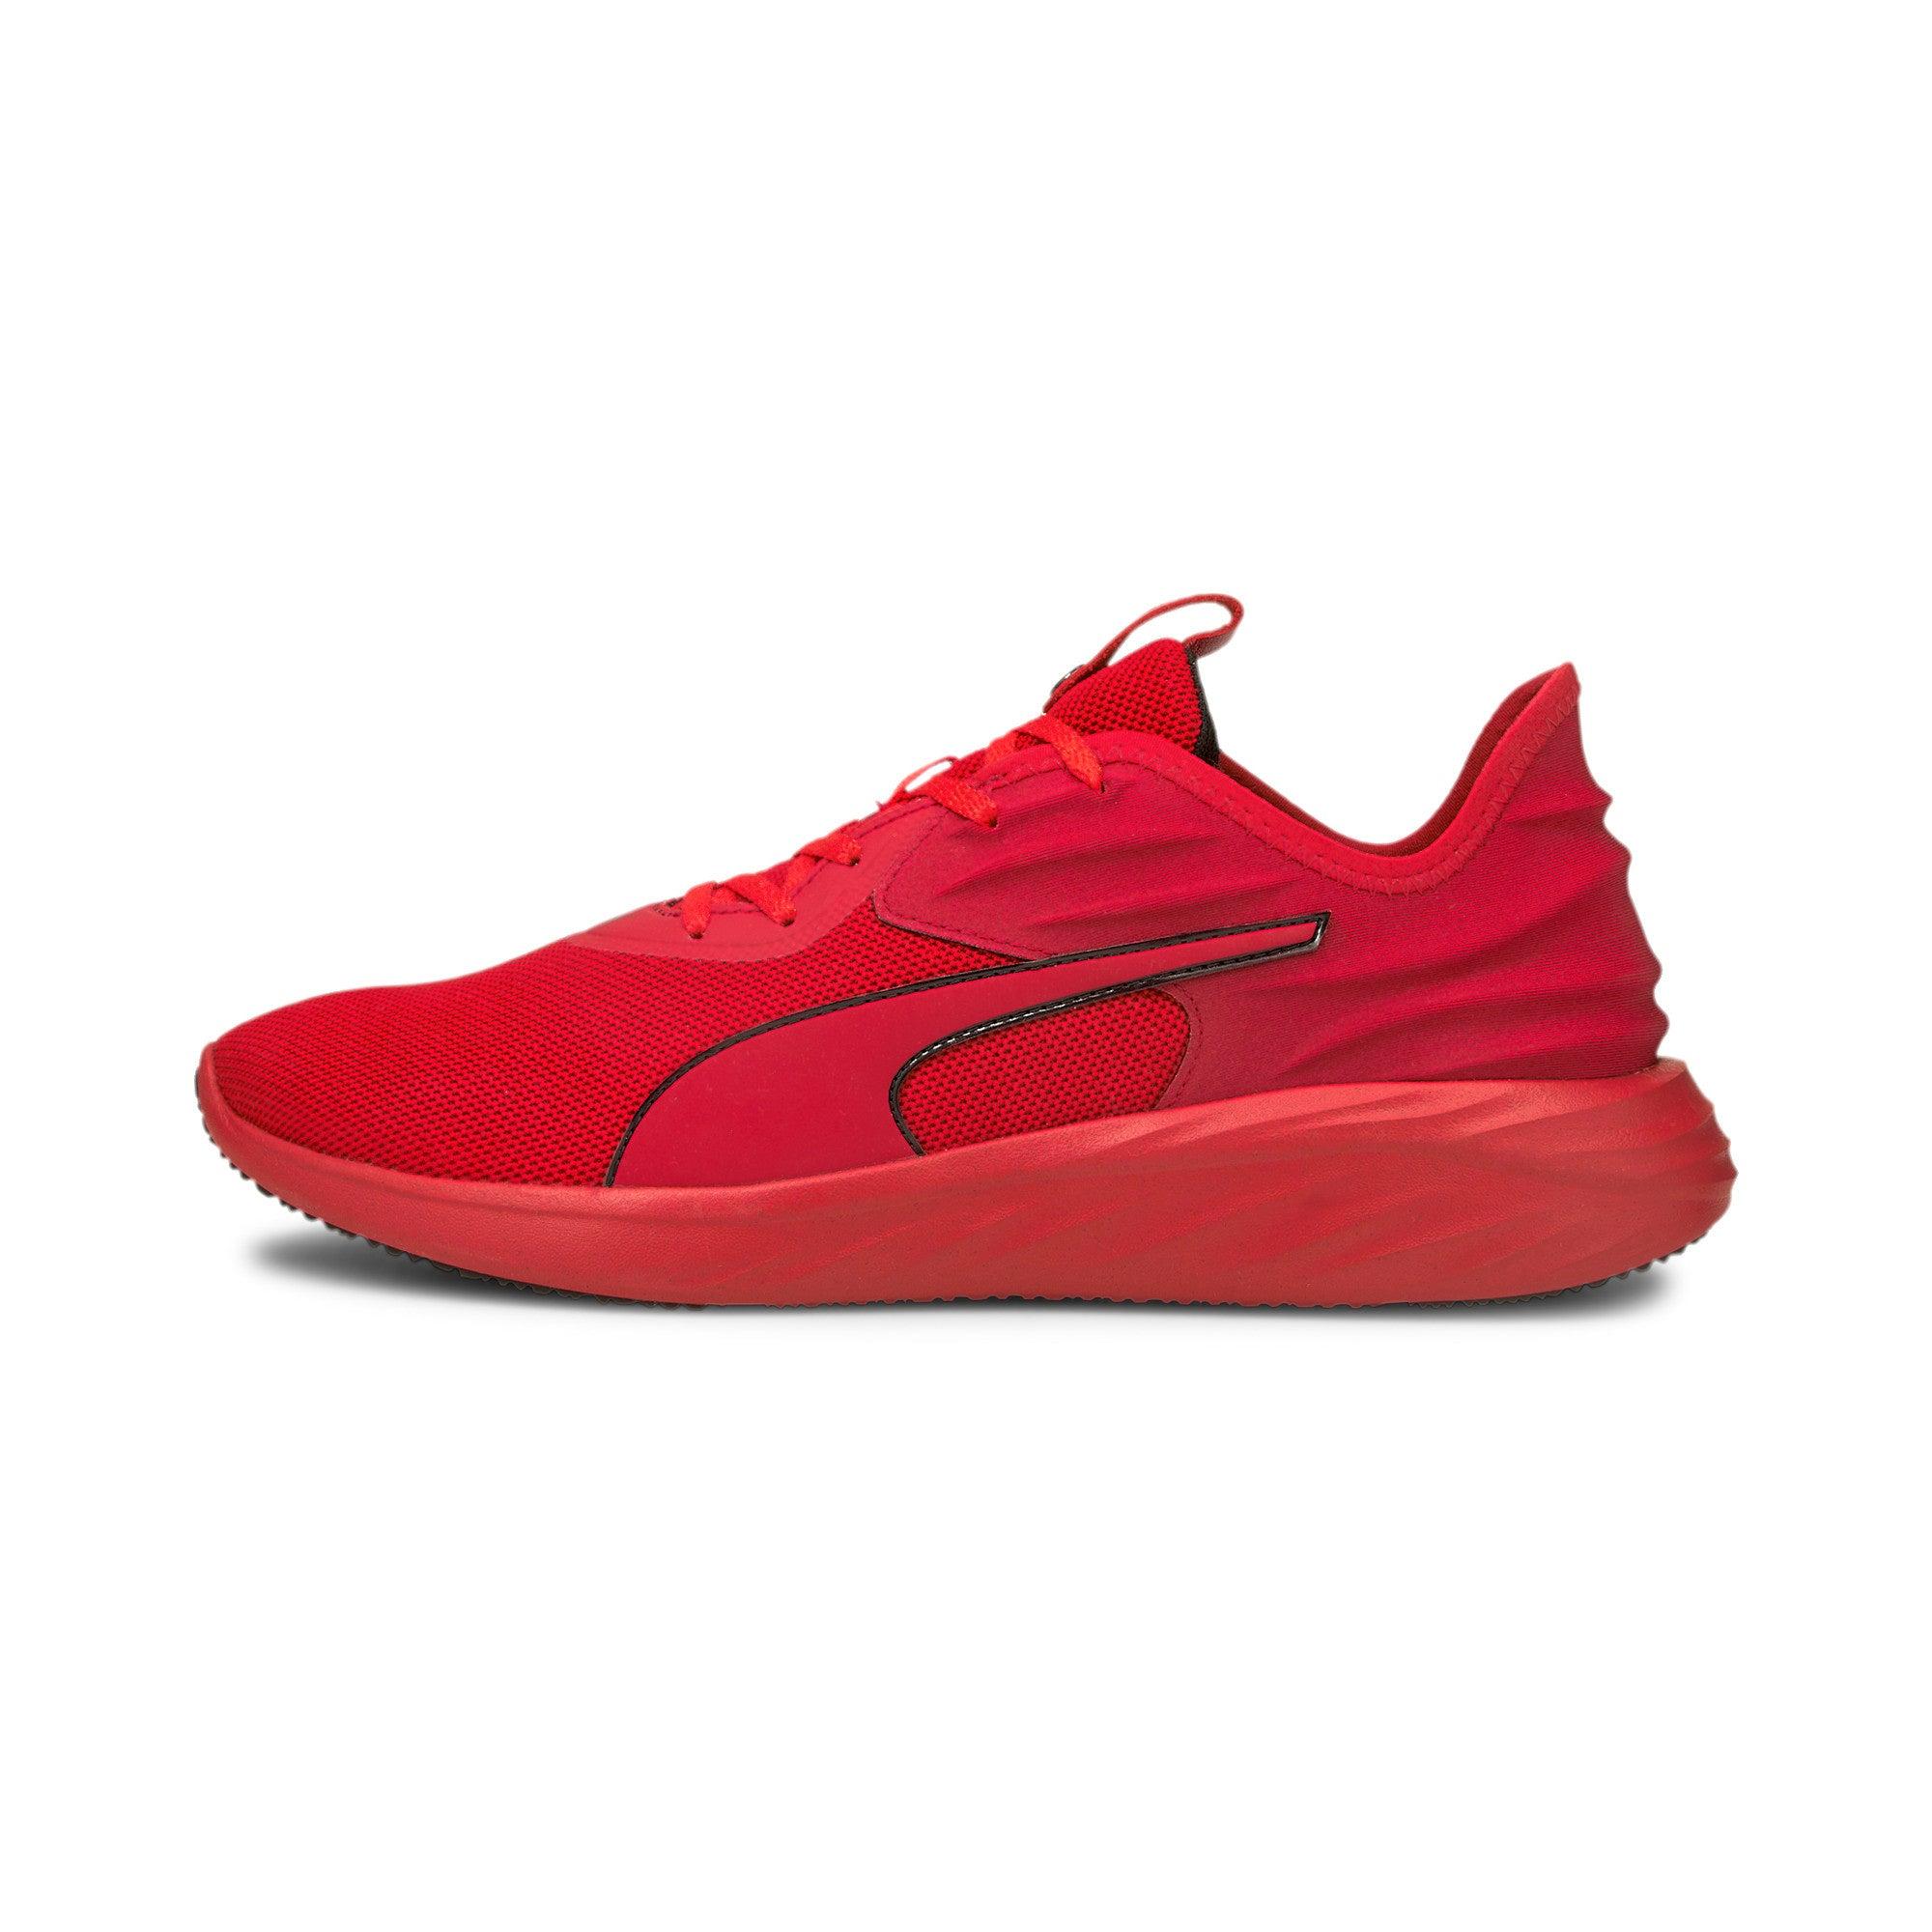 PUMA Better Foam Emerge 3d Running Shoes in Red | Lyst